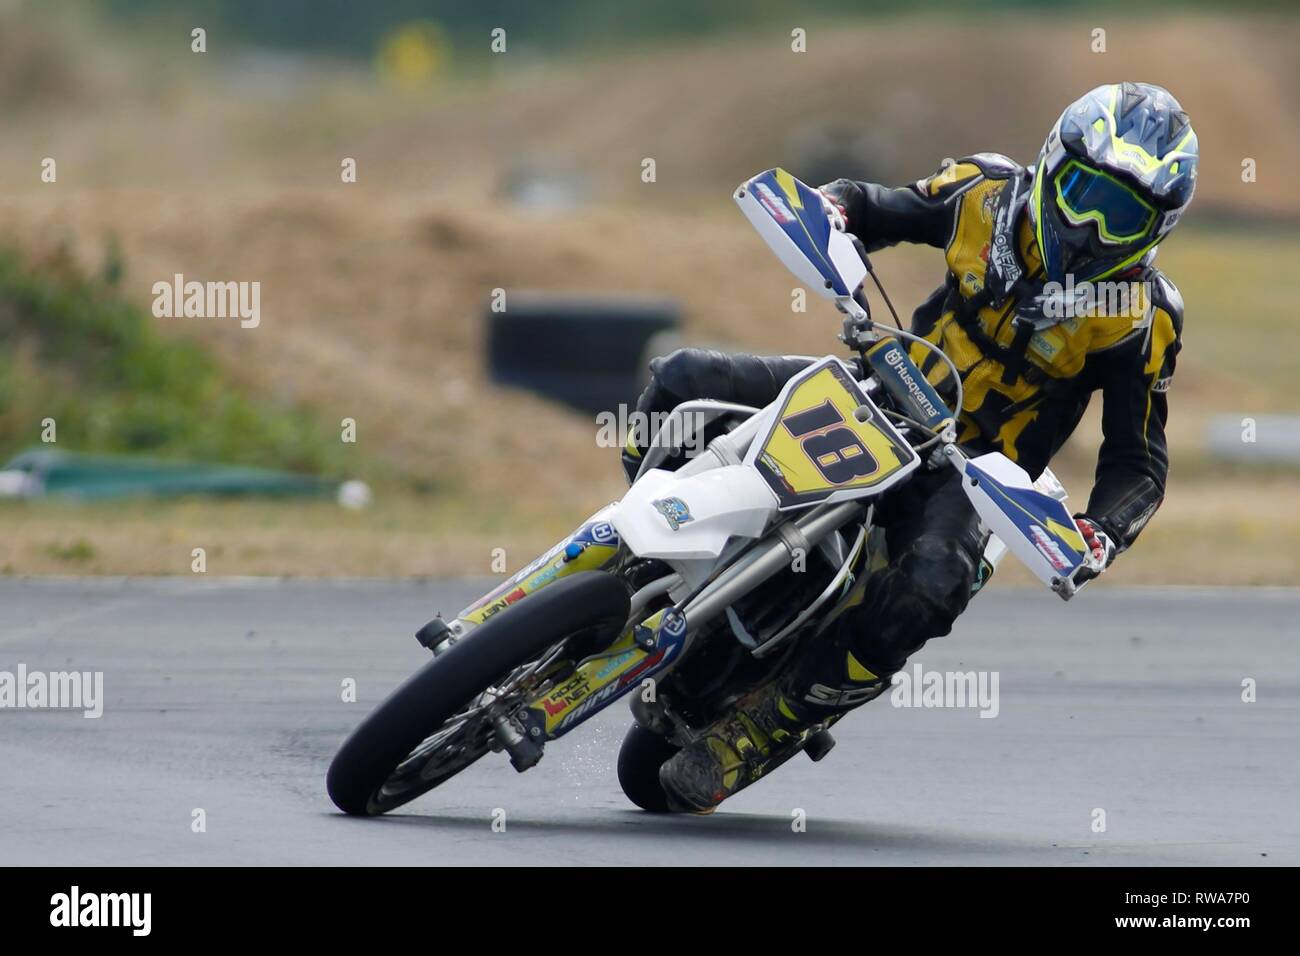 Motorcycle race on track, Czech Republic Stock Photo